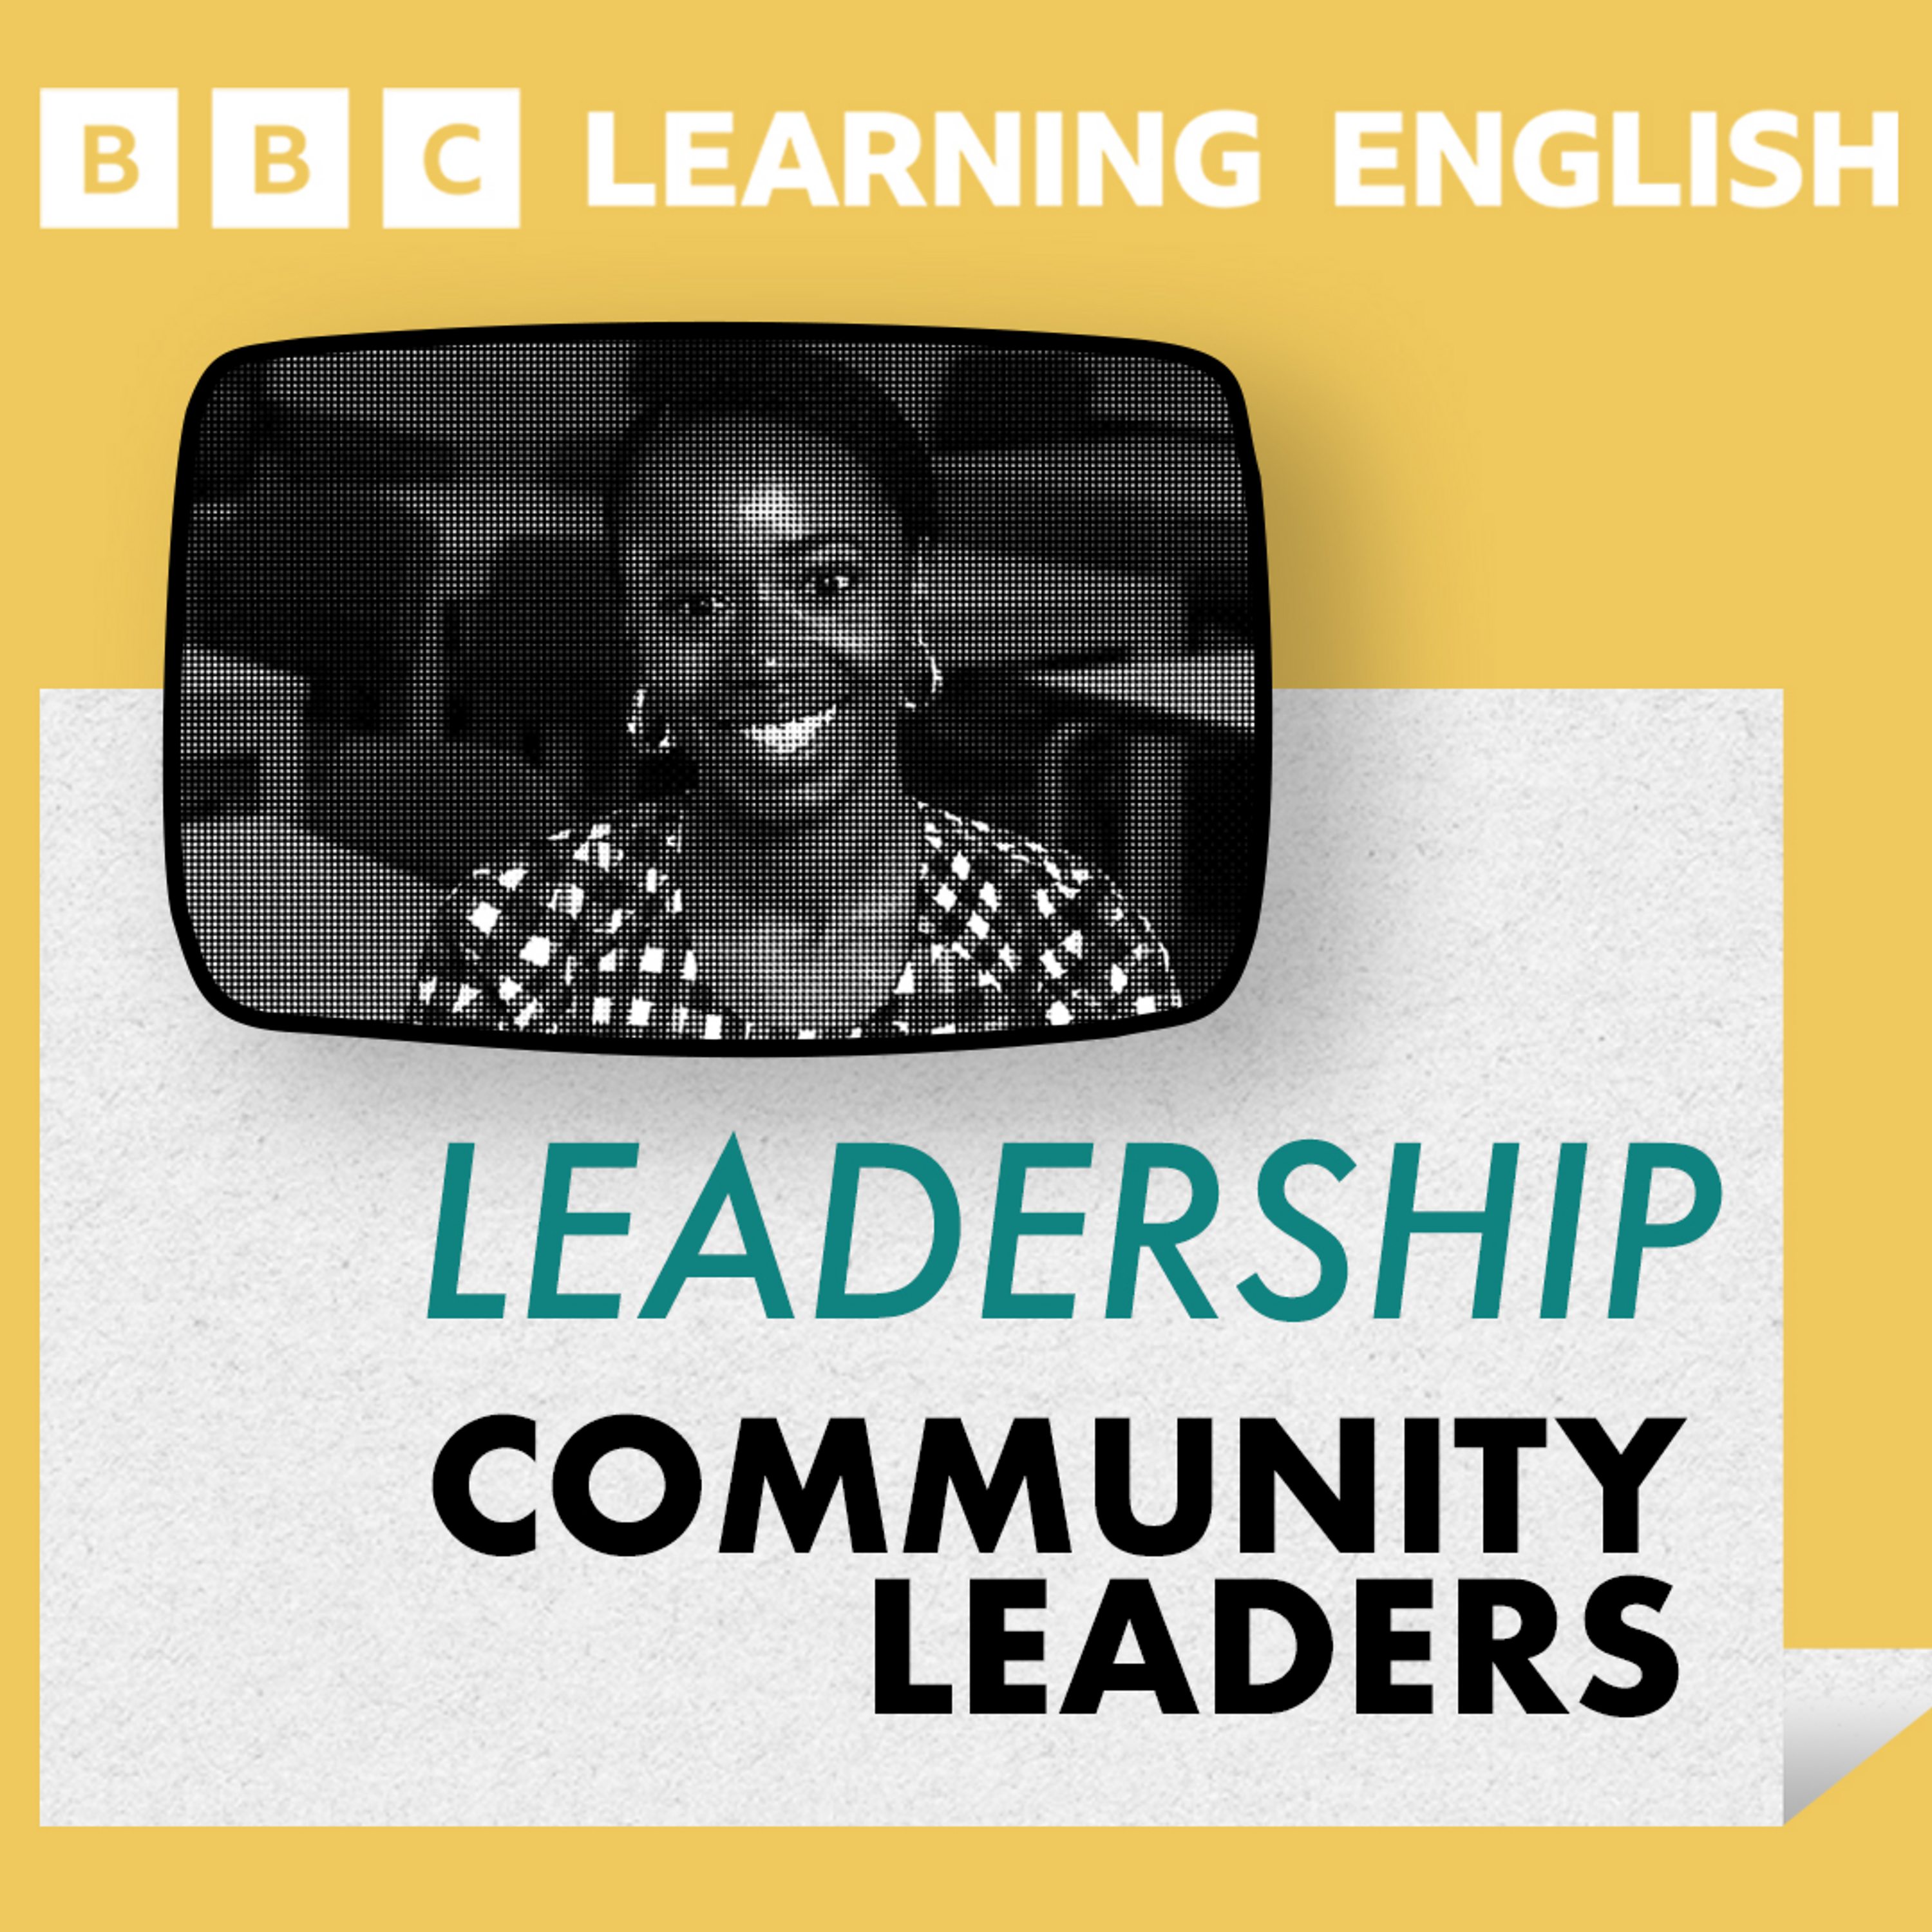 Leadership: Community leaders